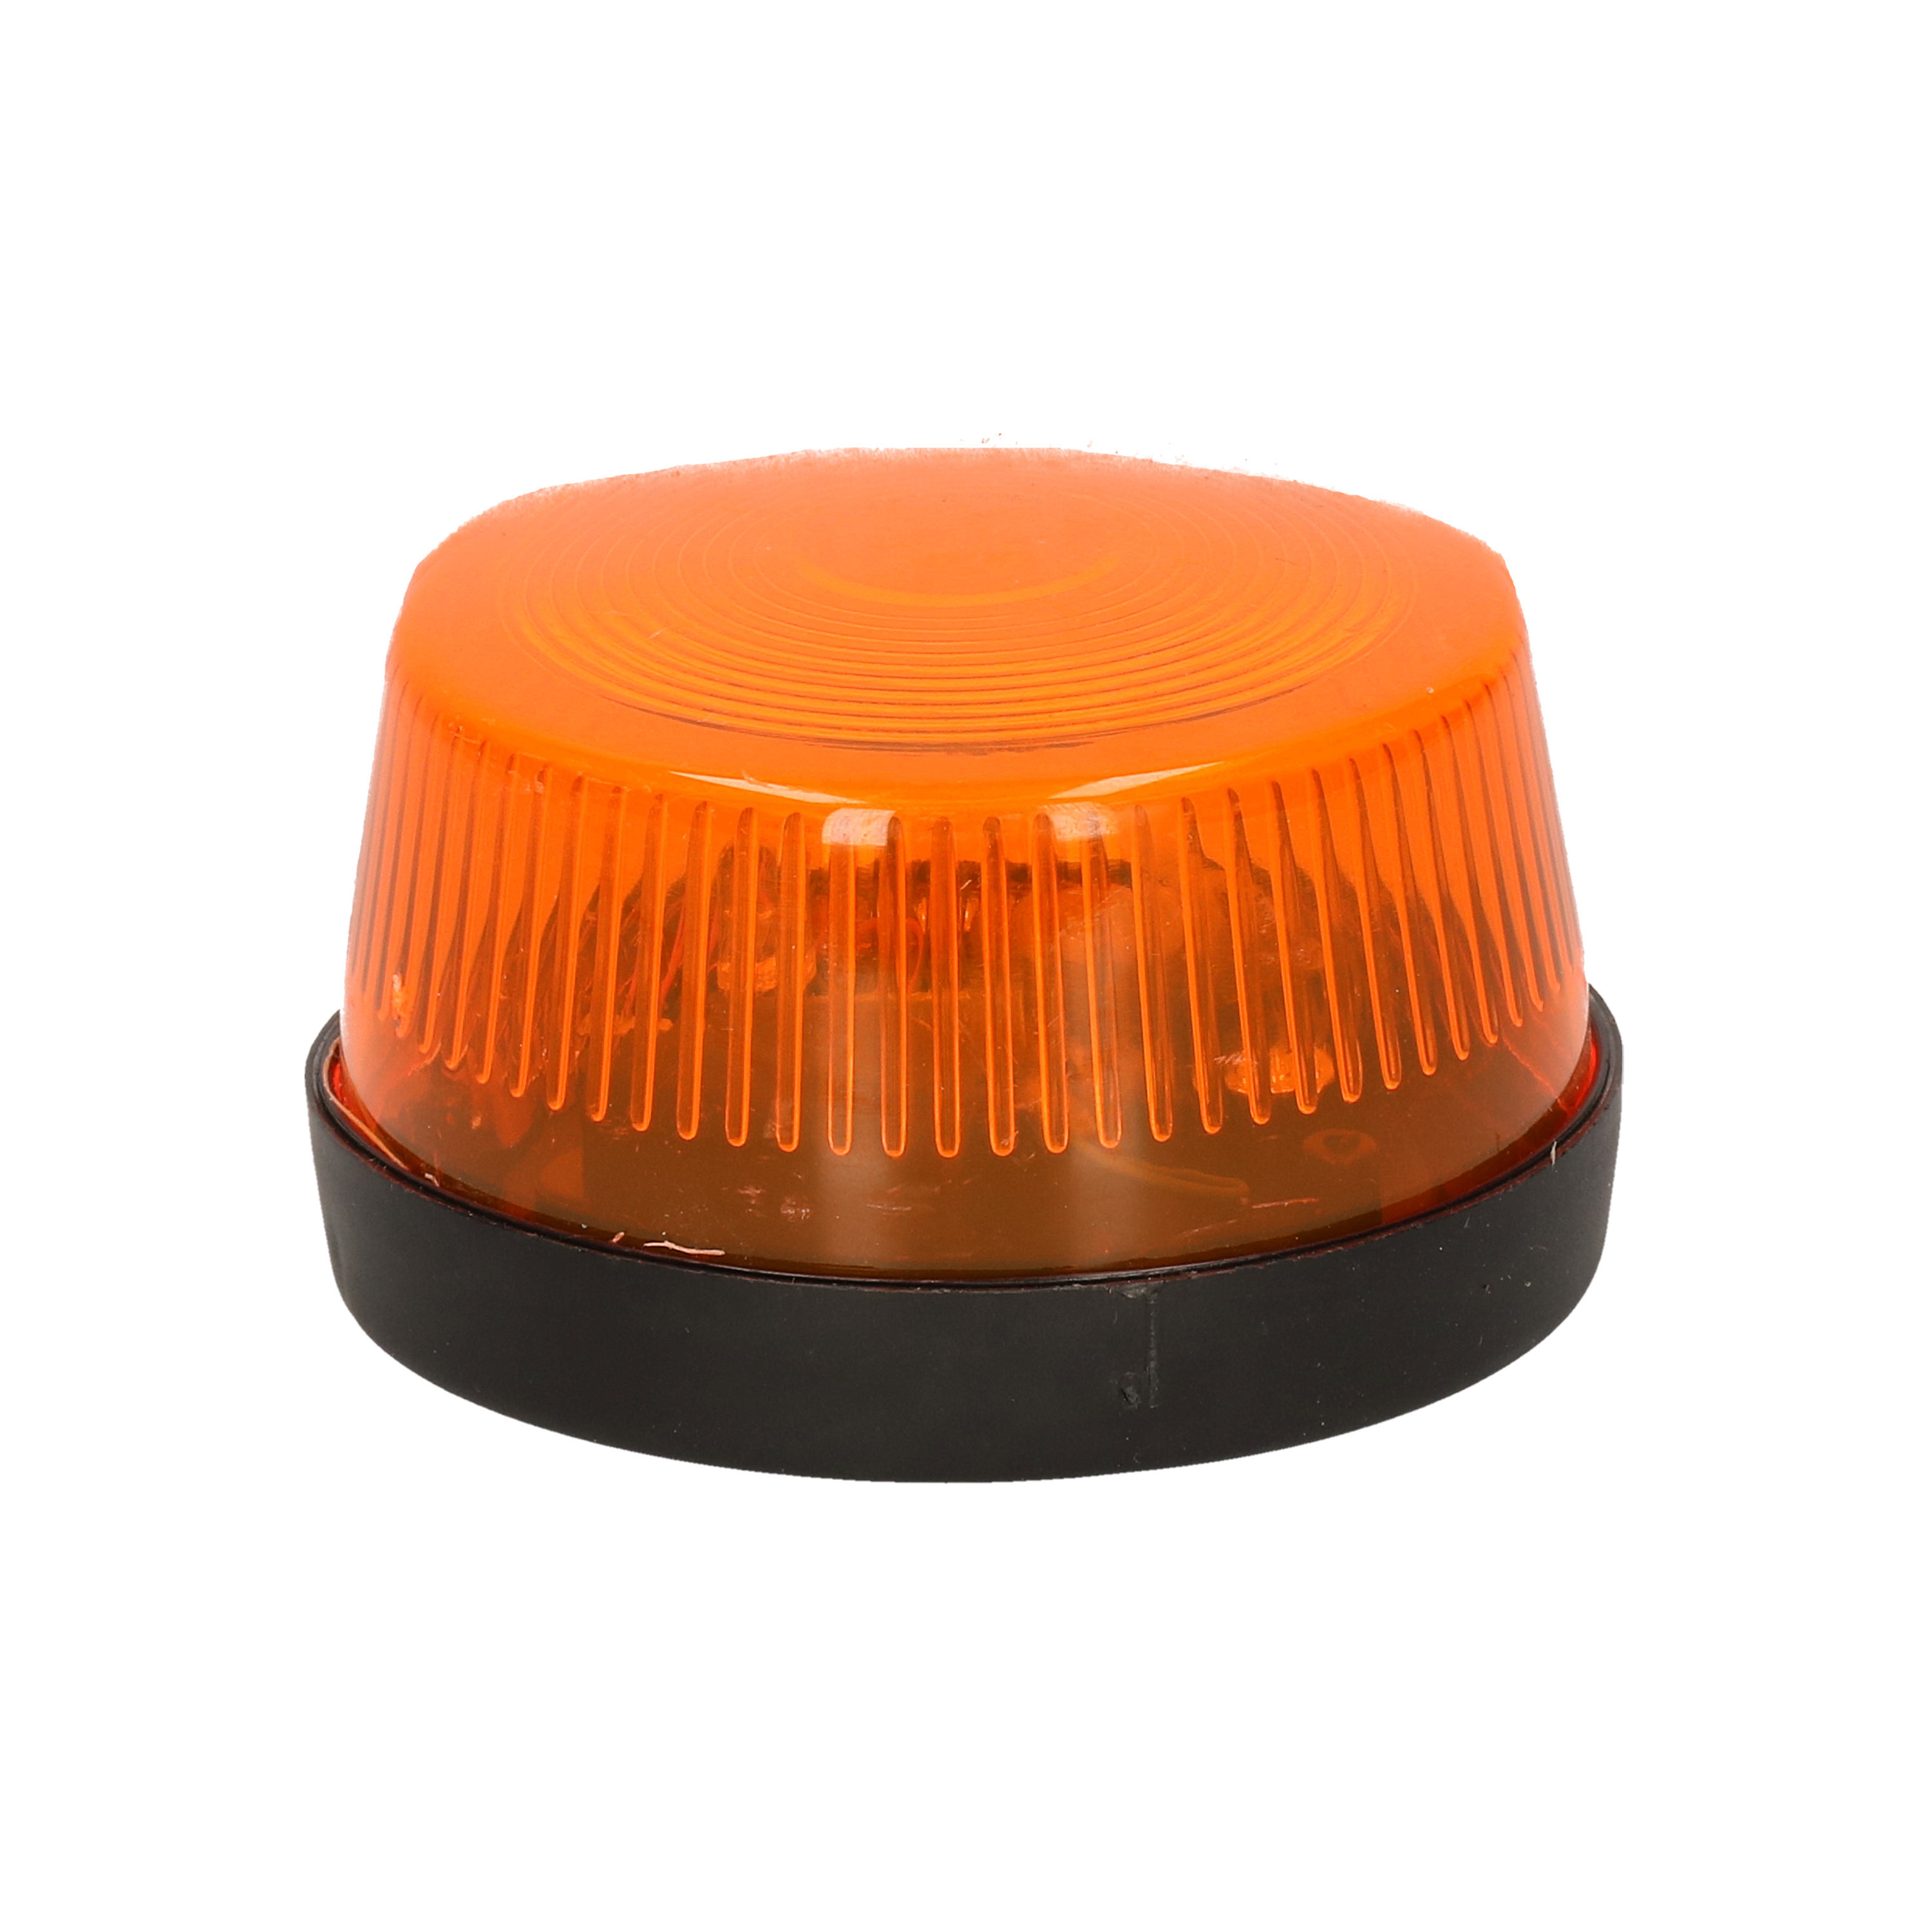 Widmann LED zwaailamp/zwaailicht met sirene - oranje waarschuwingslicht - 7 cm -